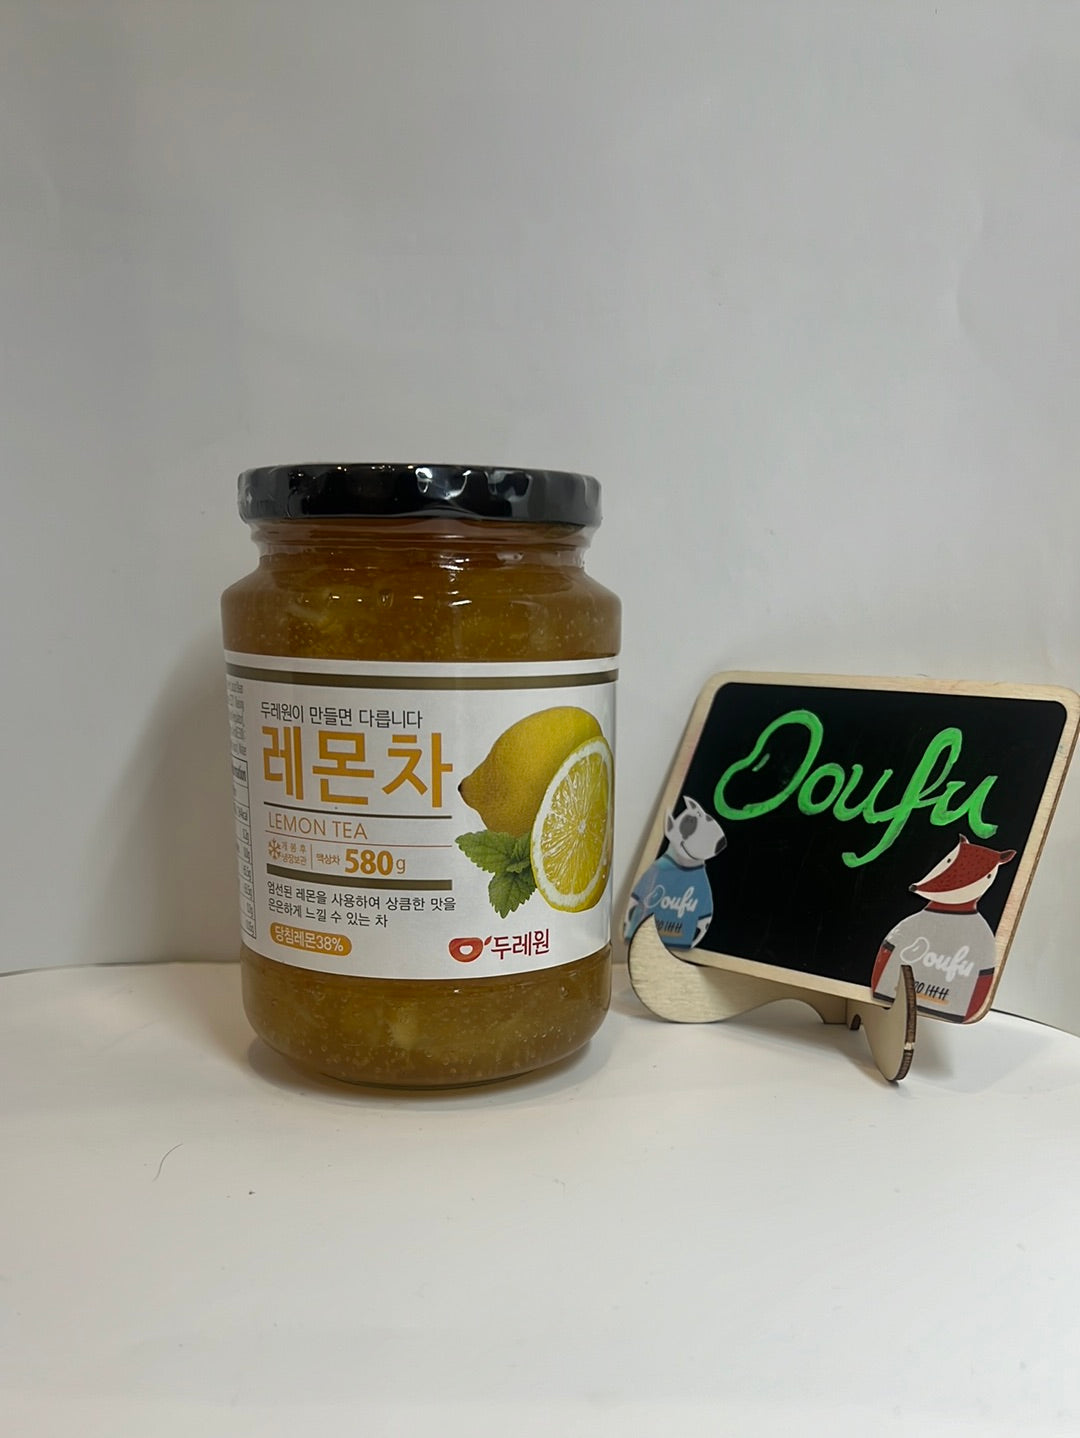 Dooraewon lemon tea 柠檬茶 580g